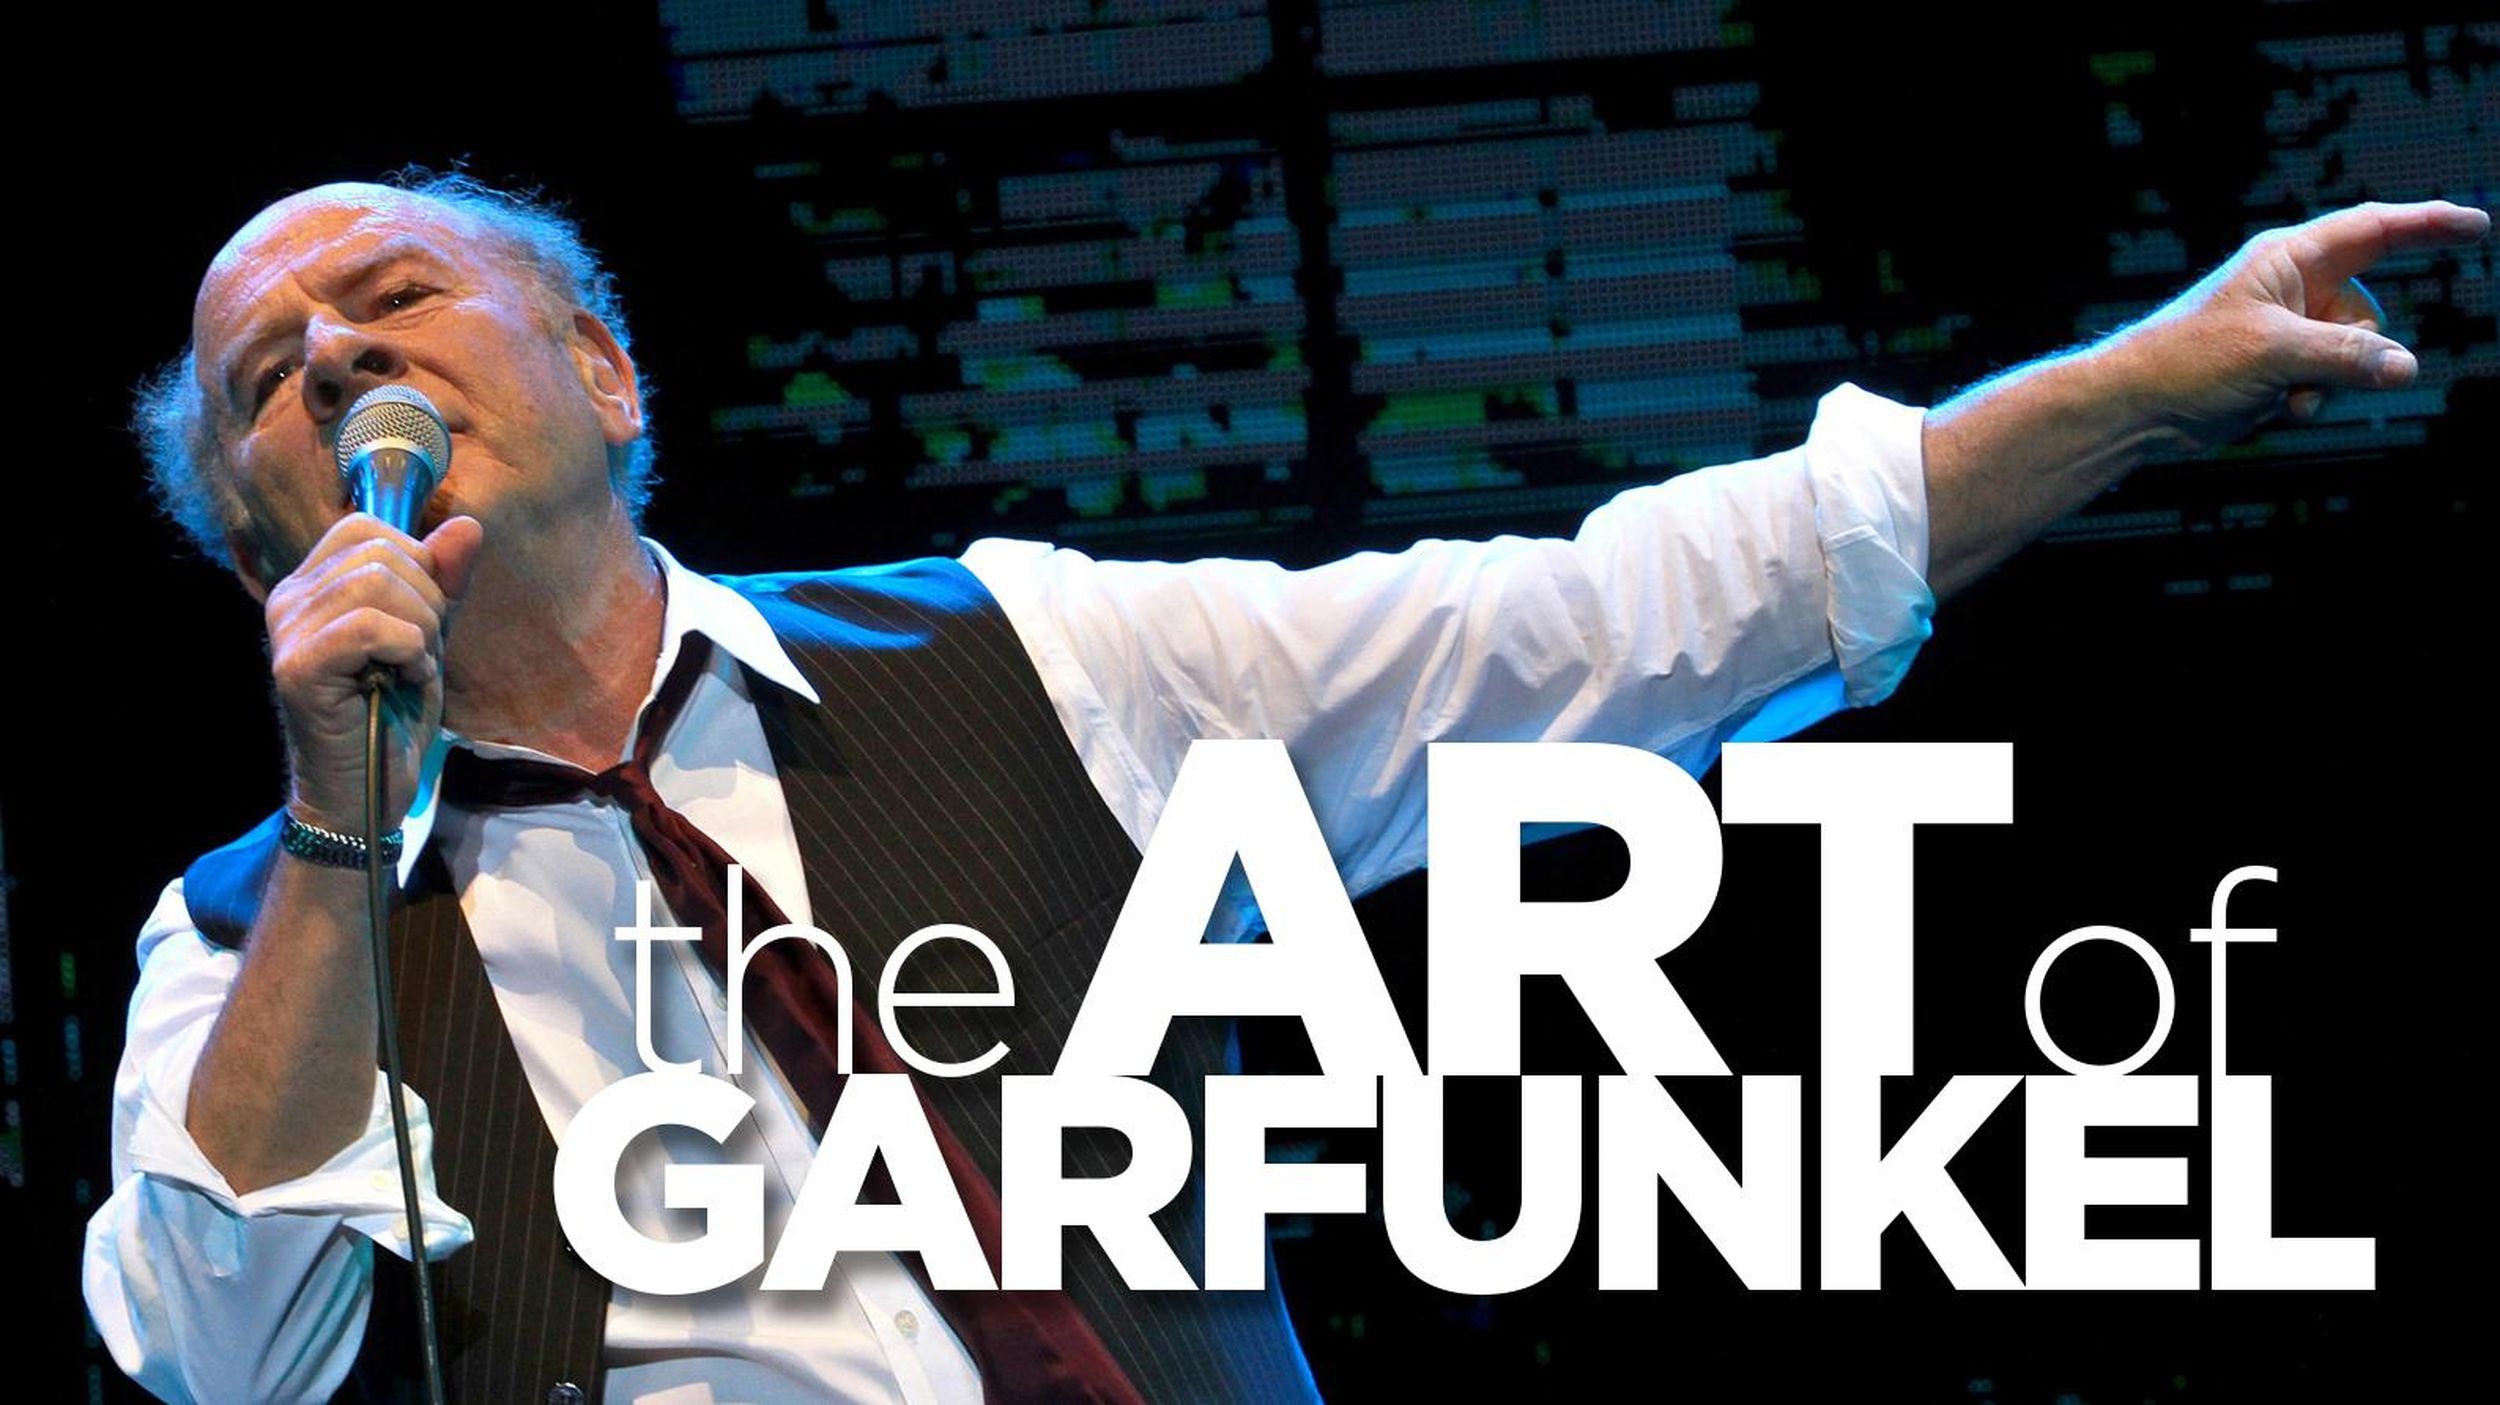 Vocalist Art Garfunkel performs God Bless America during the